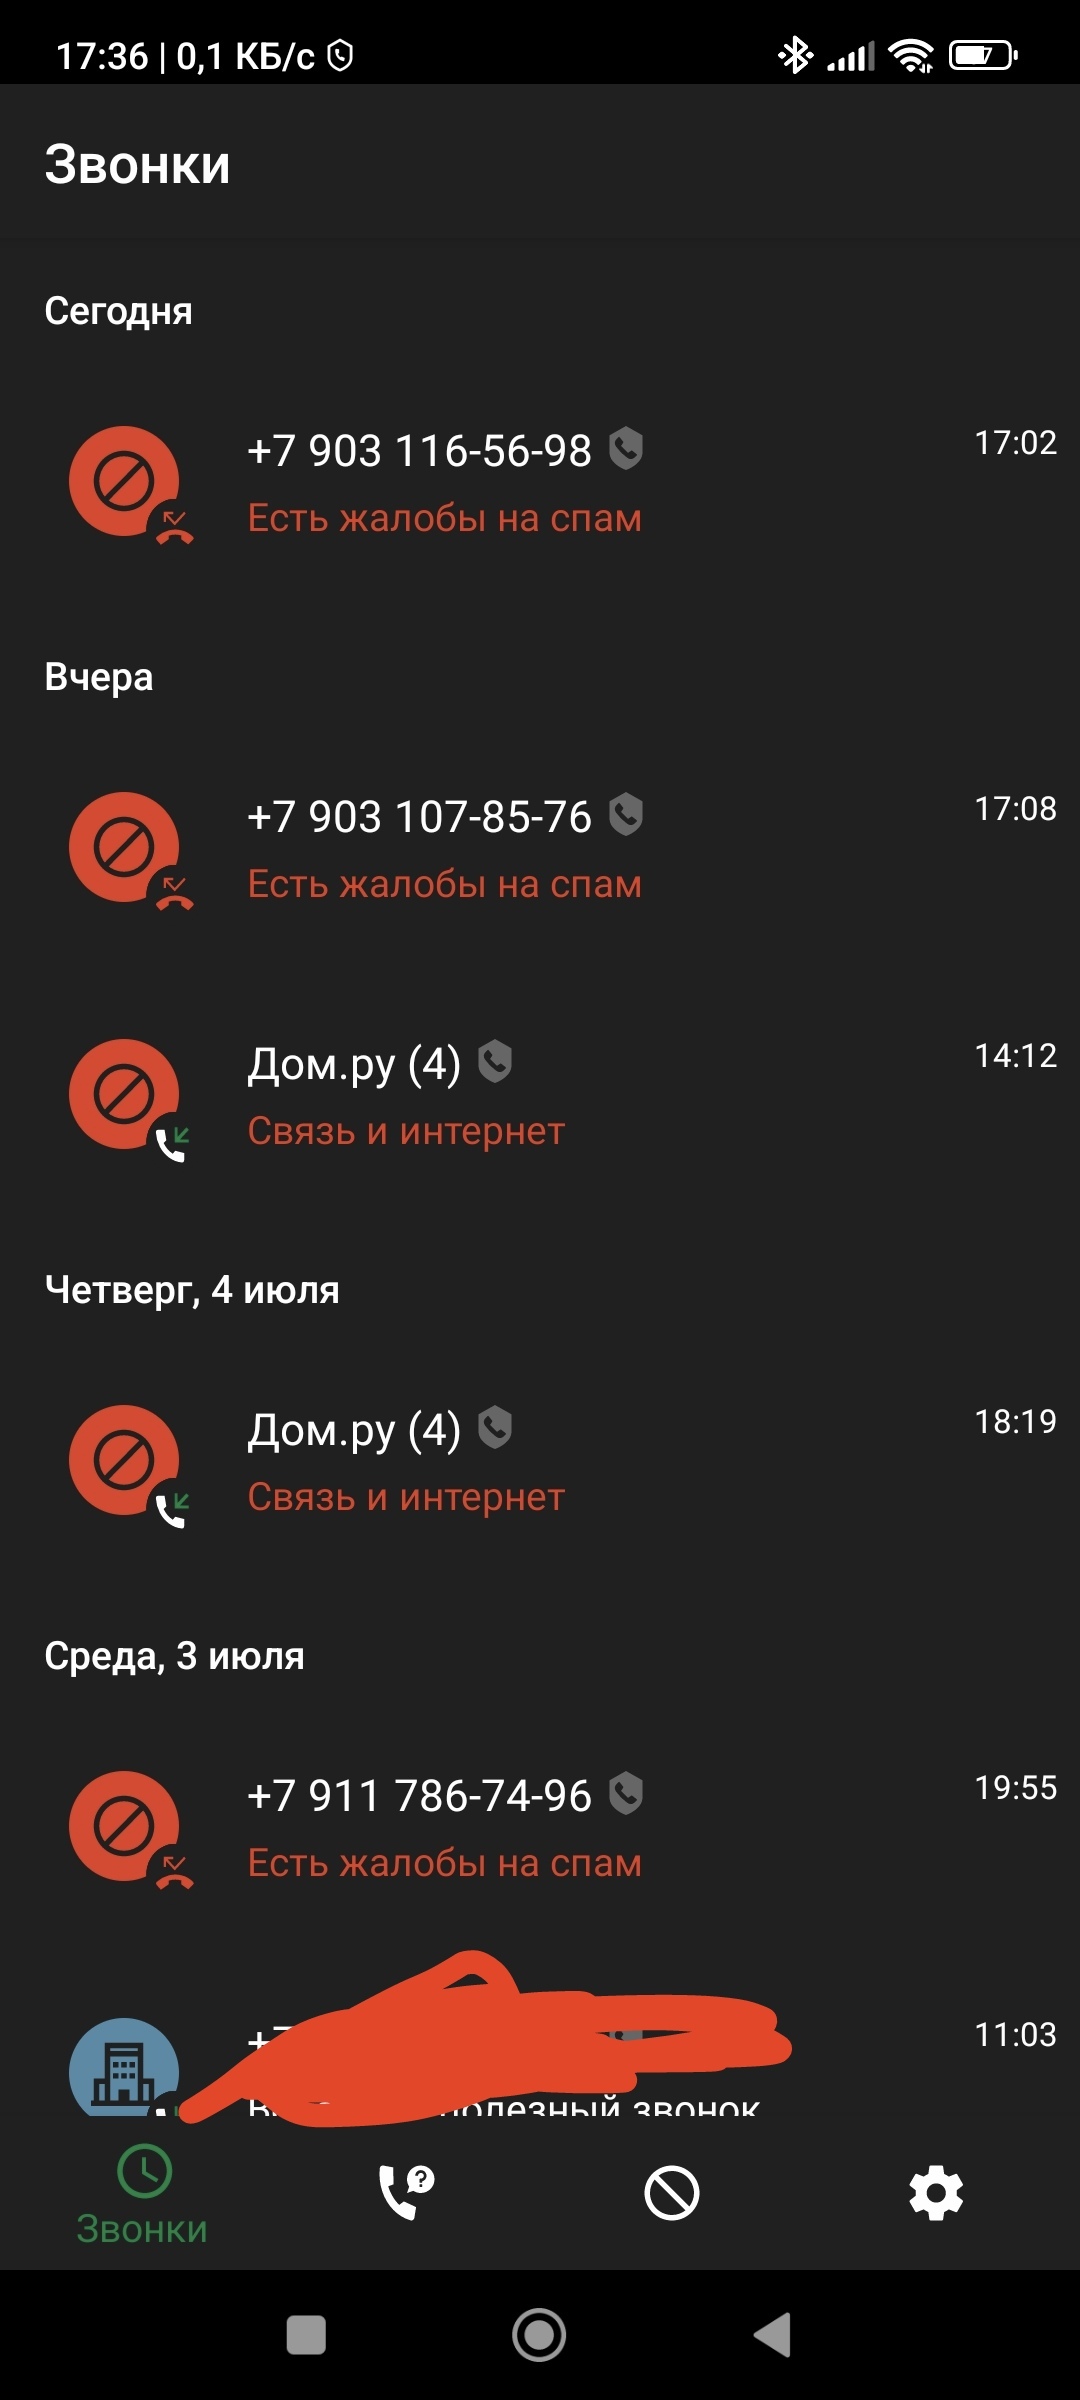 Post #11576917 - My, Home ru, Data leak, ISP, Longpost